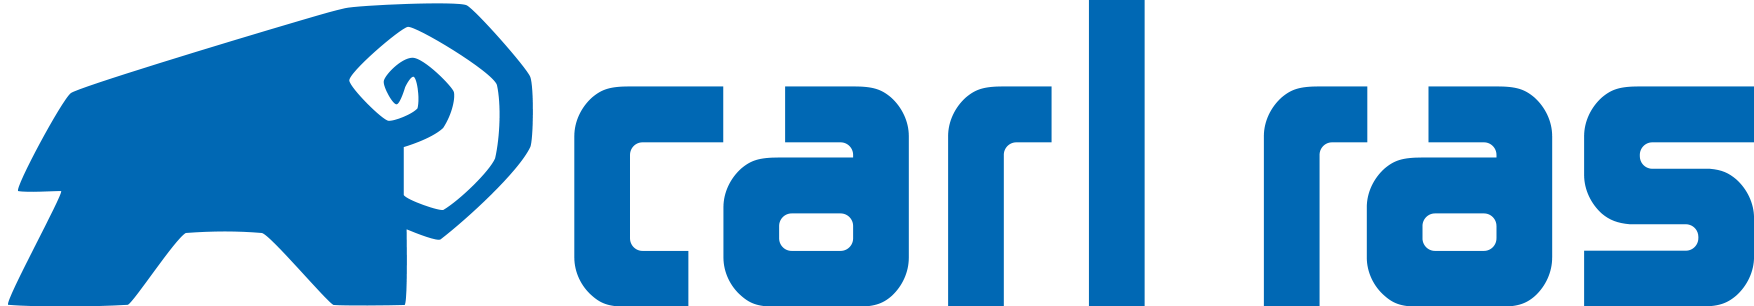 carl ras logo